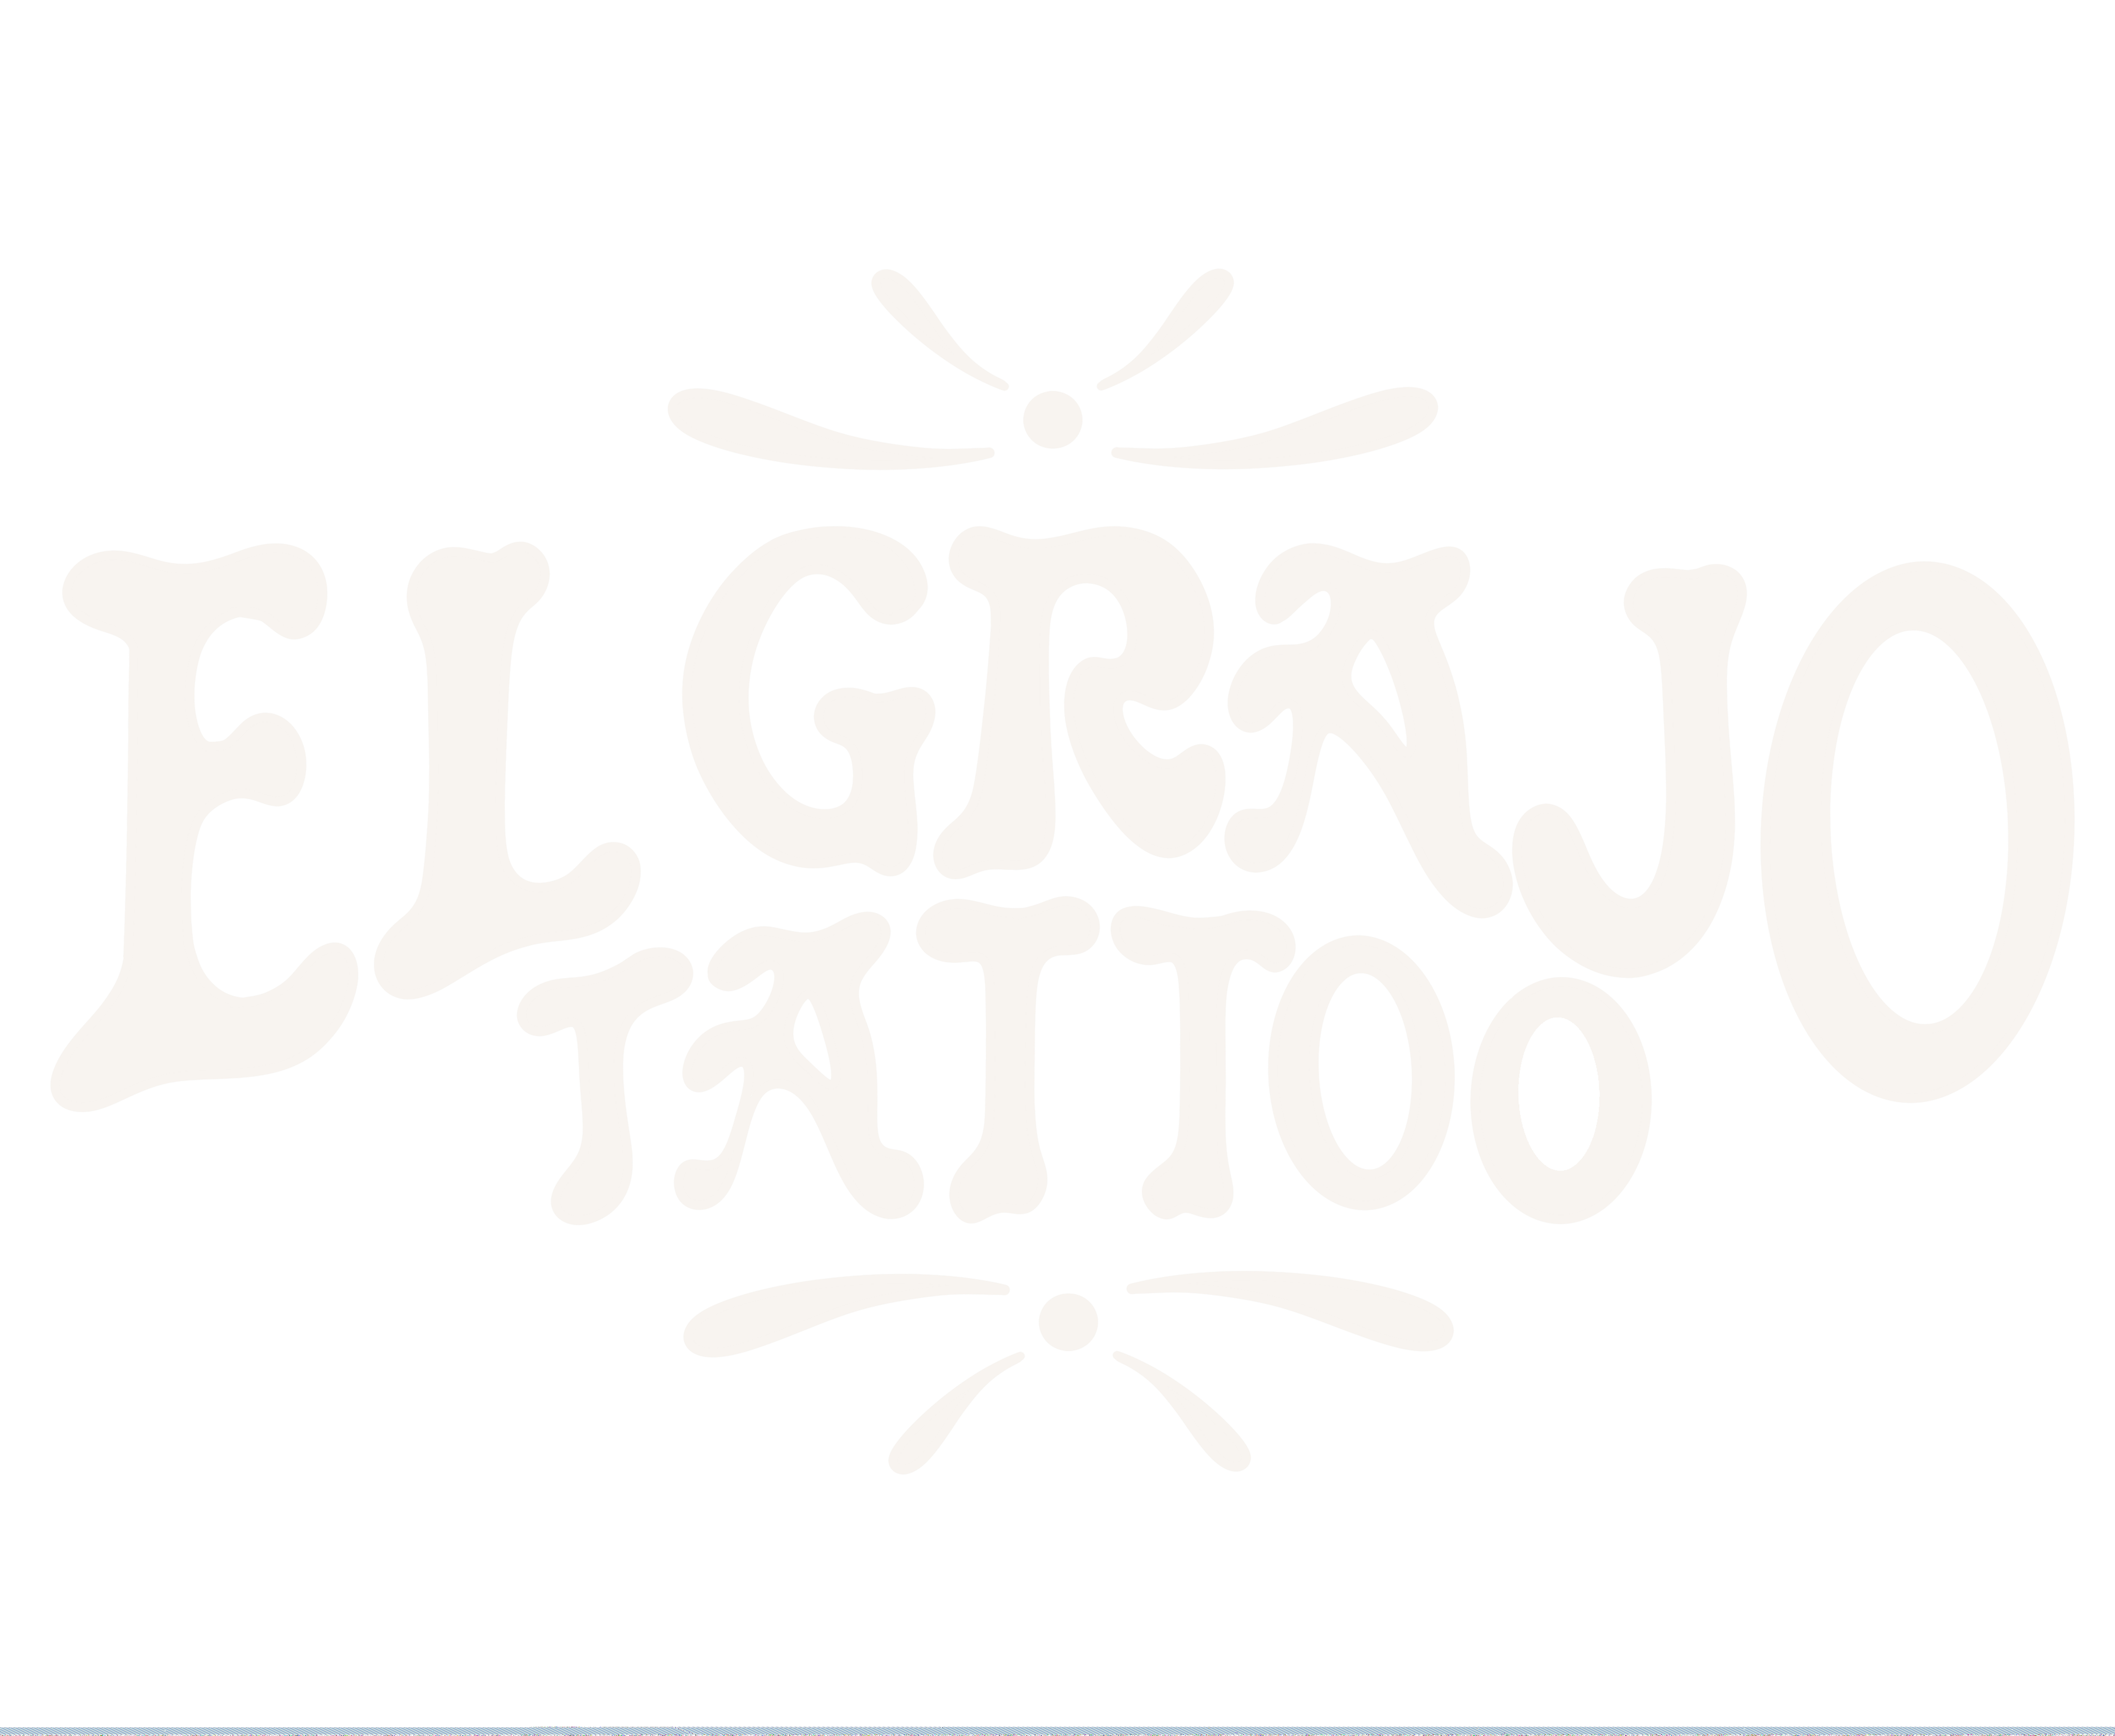 El Grajo Tattoo